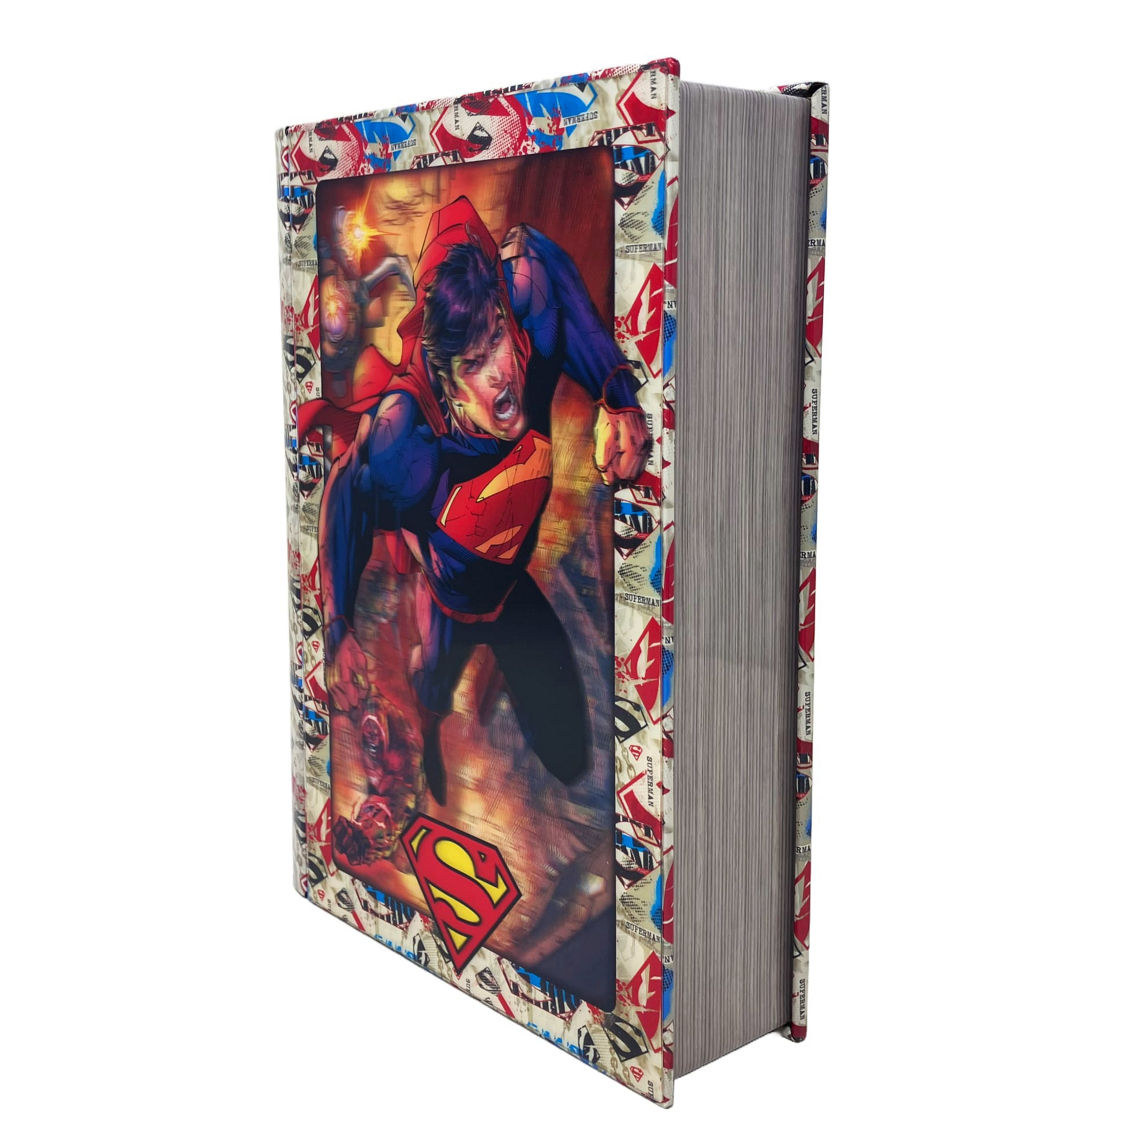 Prime 3D DC Comics Superman 3D Lenticular Puzzle in a Collectible Tin Book: 300 Pcs - Image 4 of 5